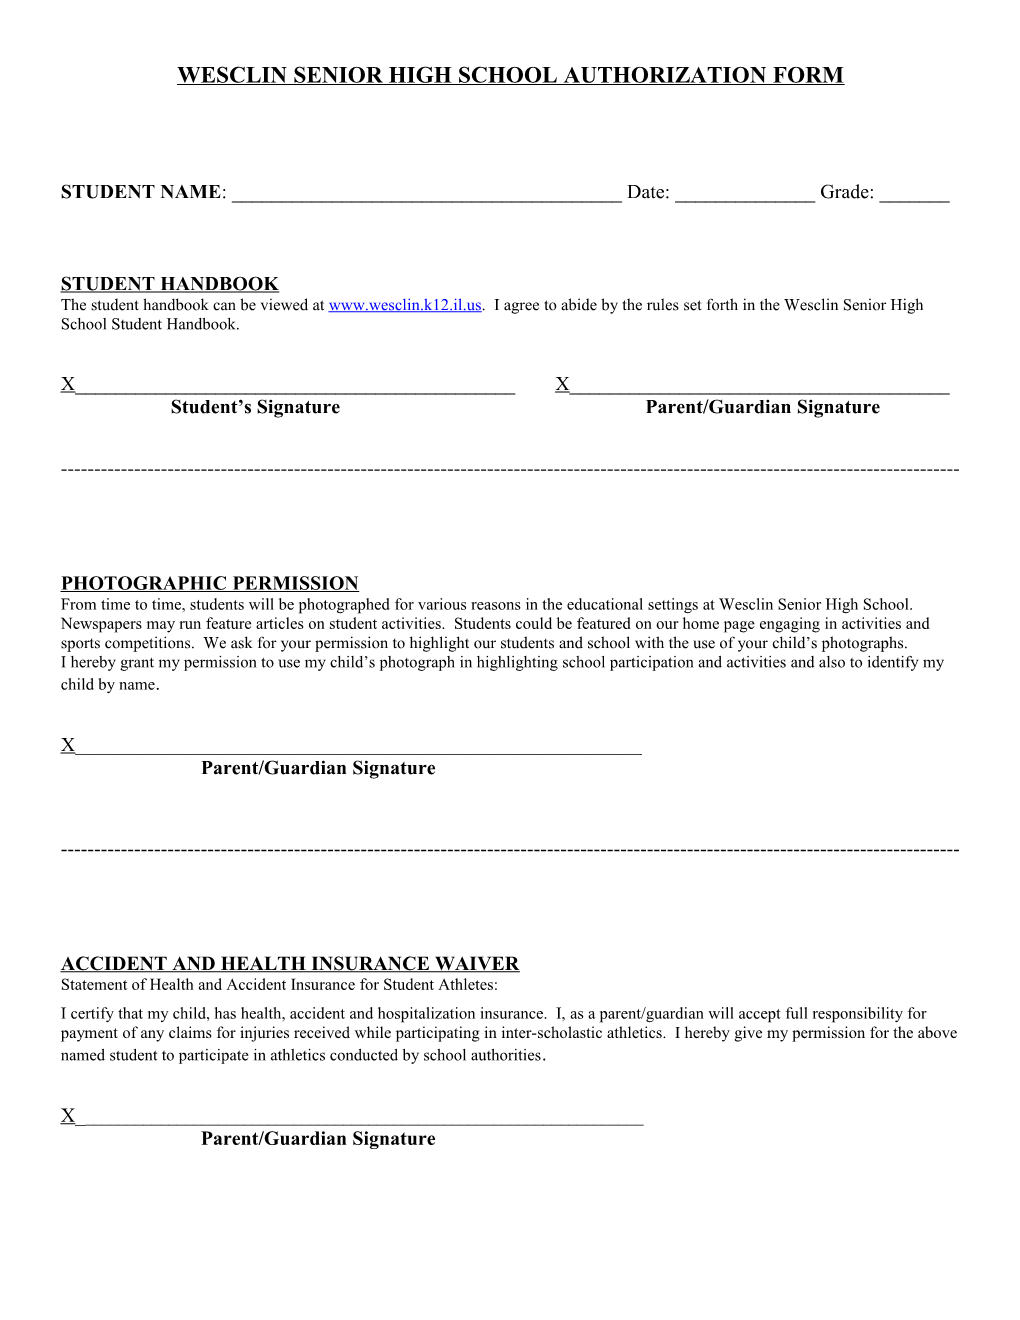 Wesclin Senior High School Authorization Form